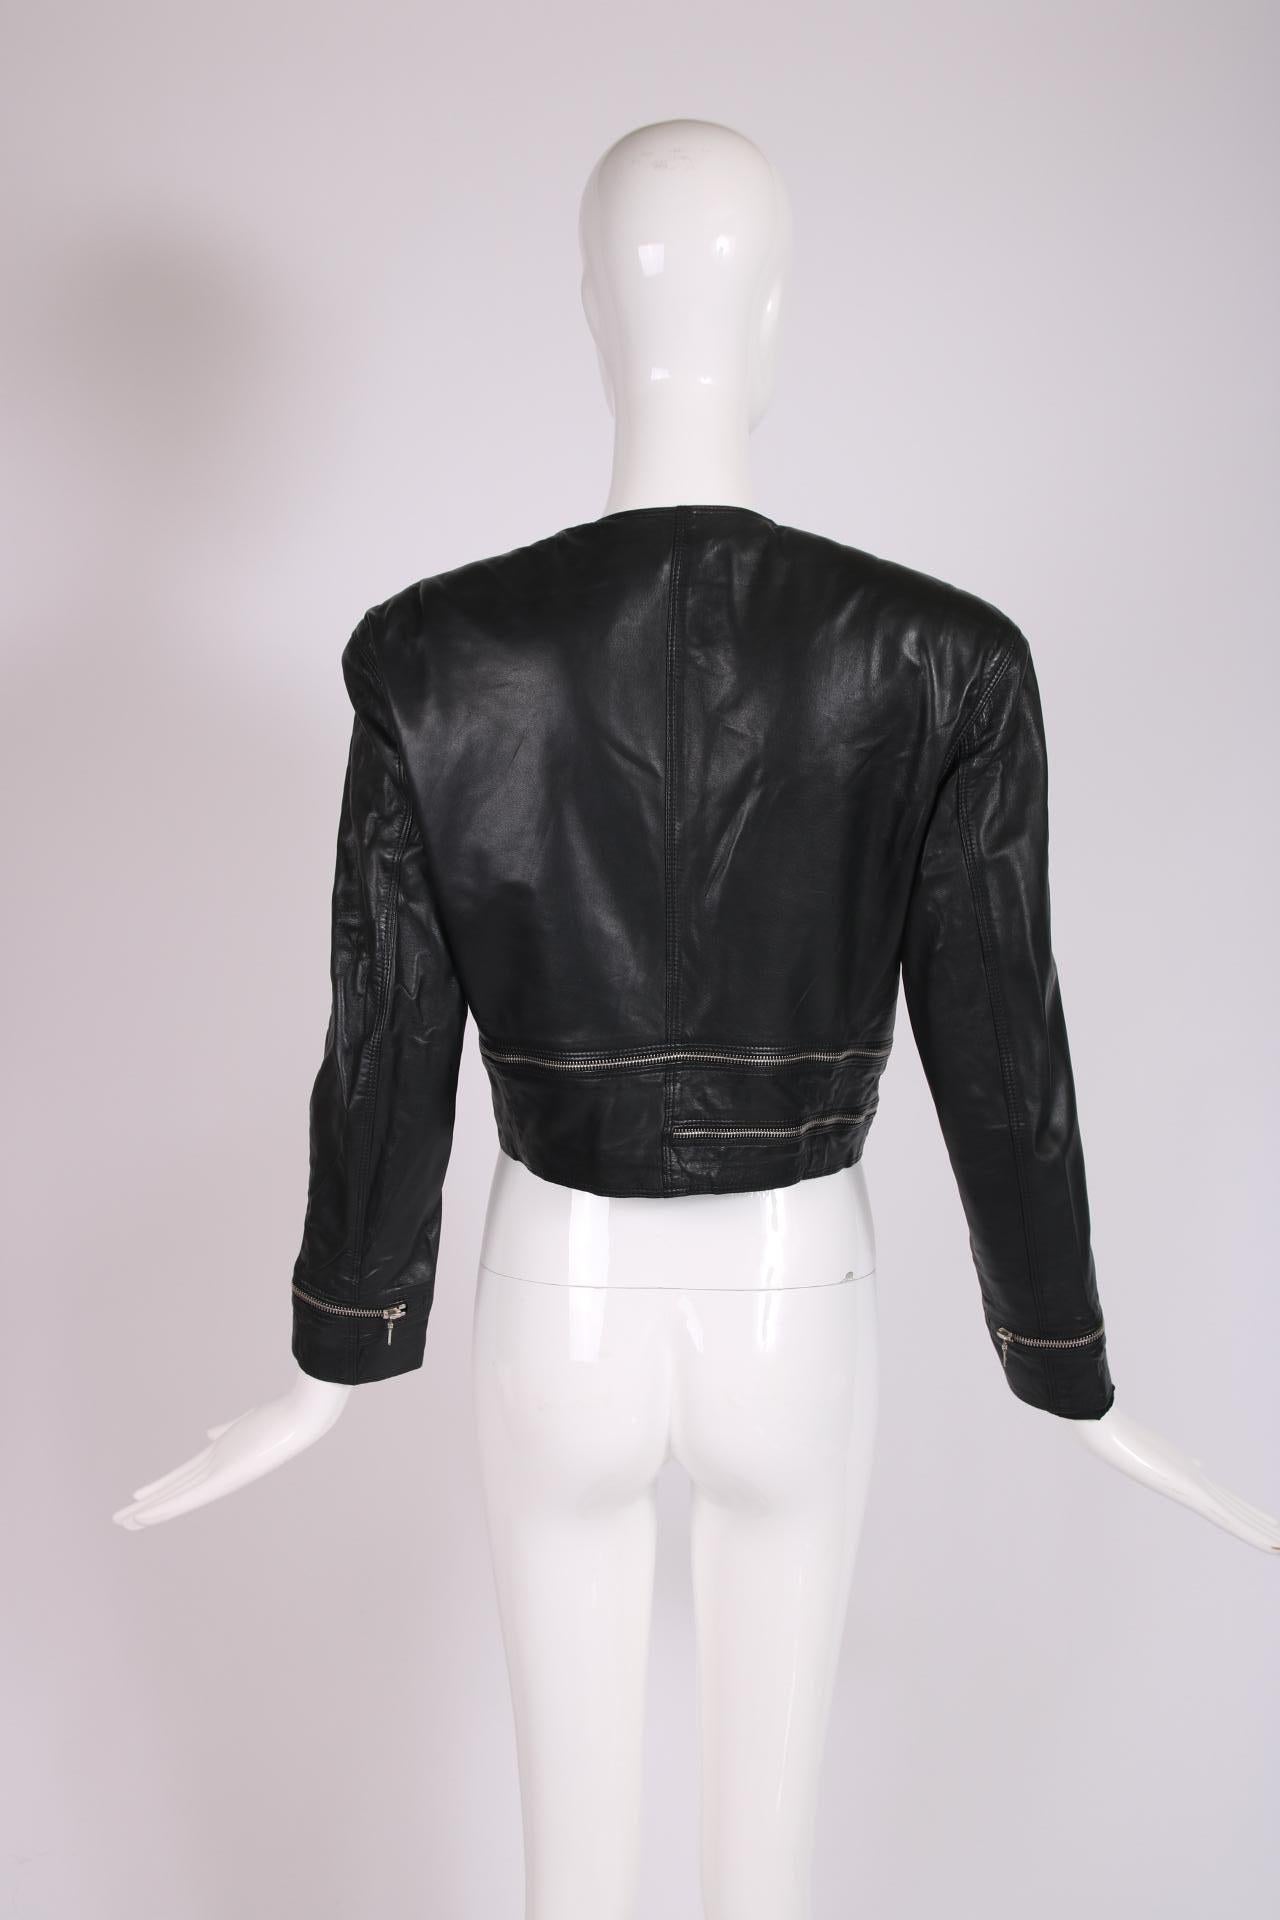 Versace Black Leather Motorcycle Jacket 2